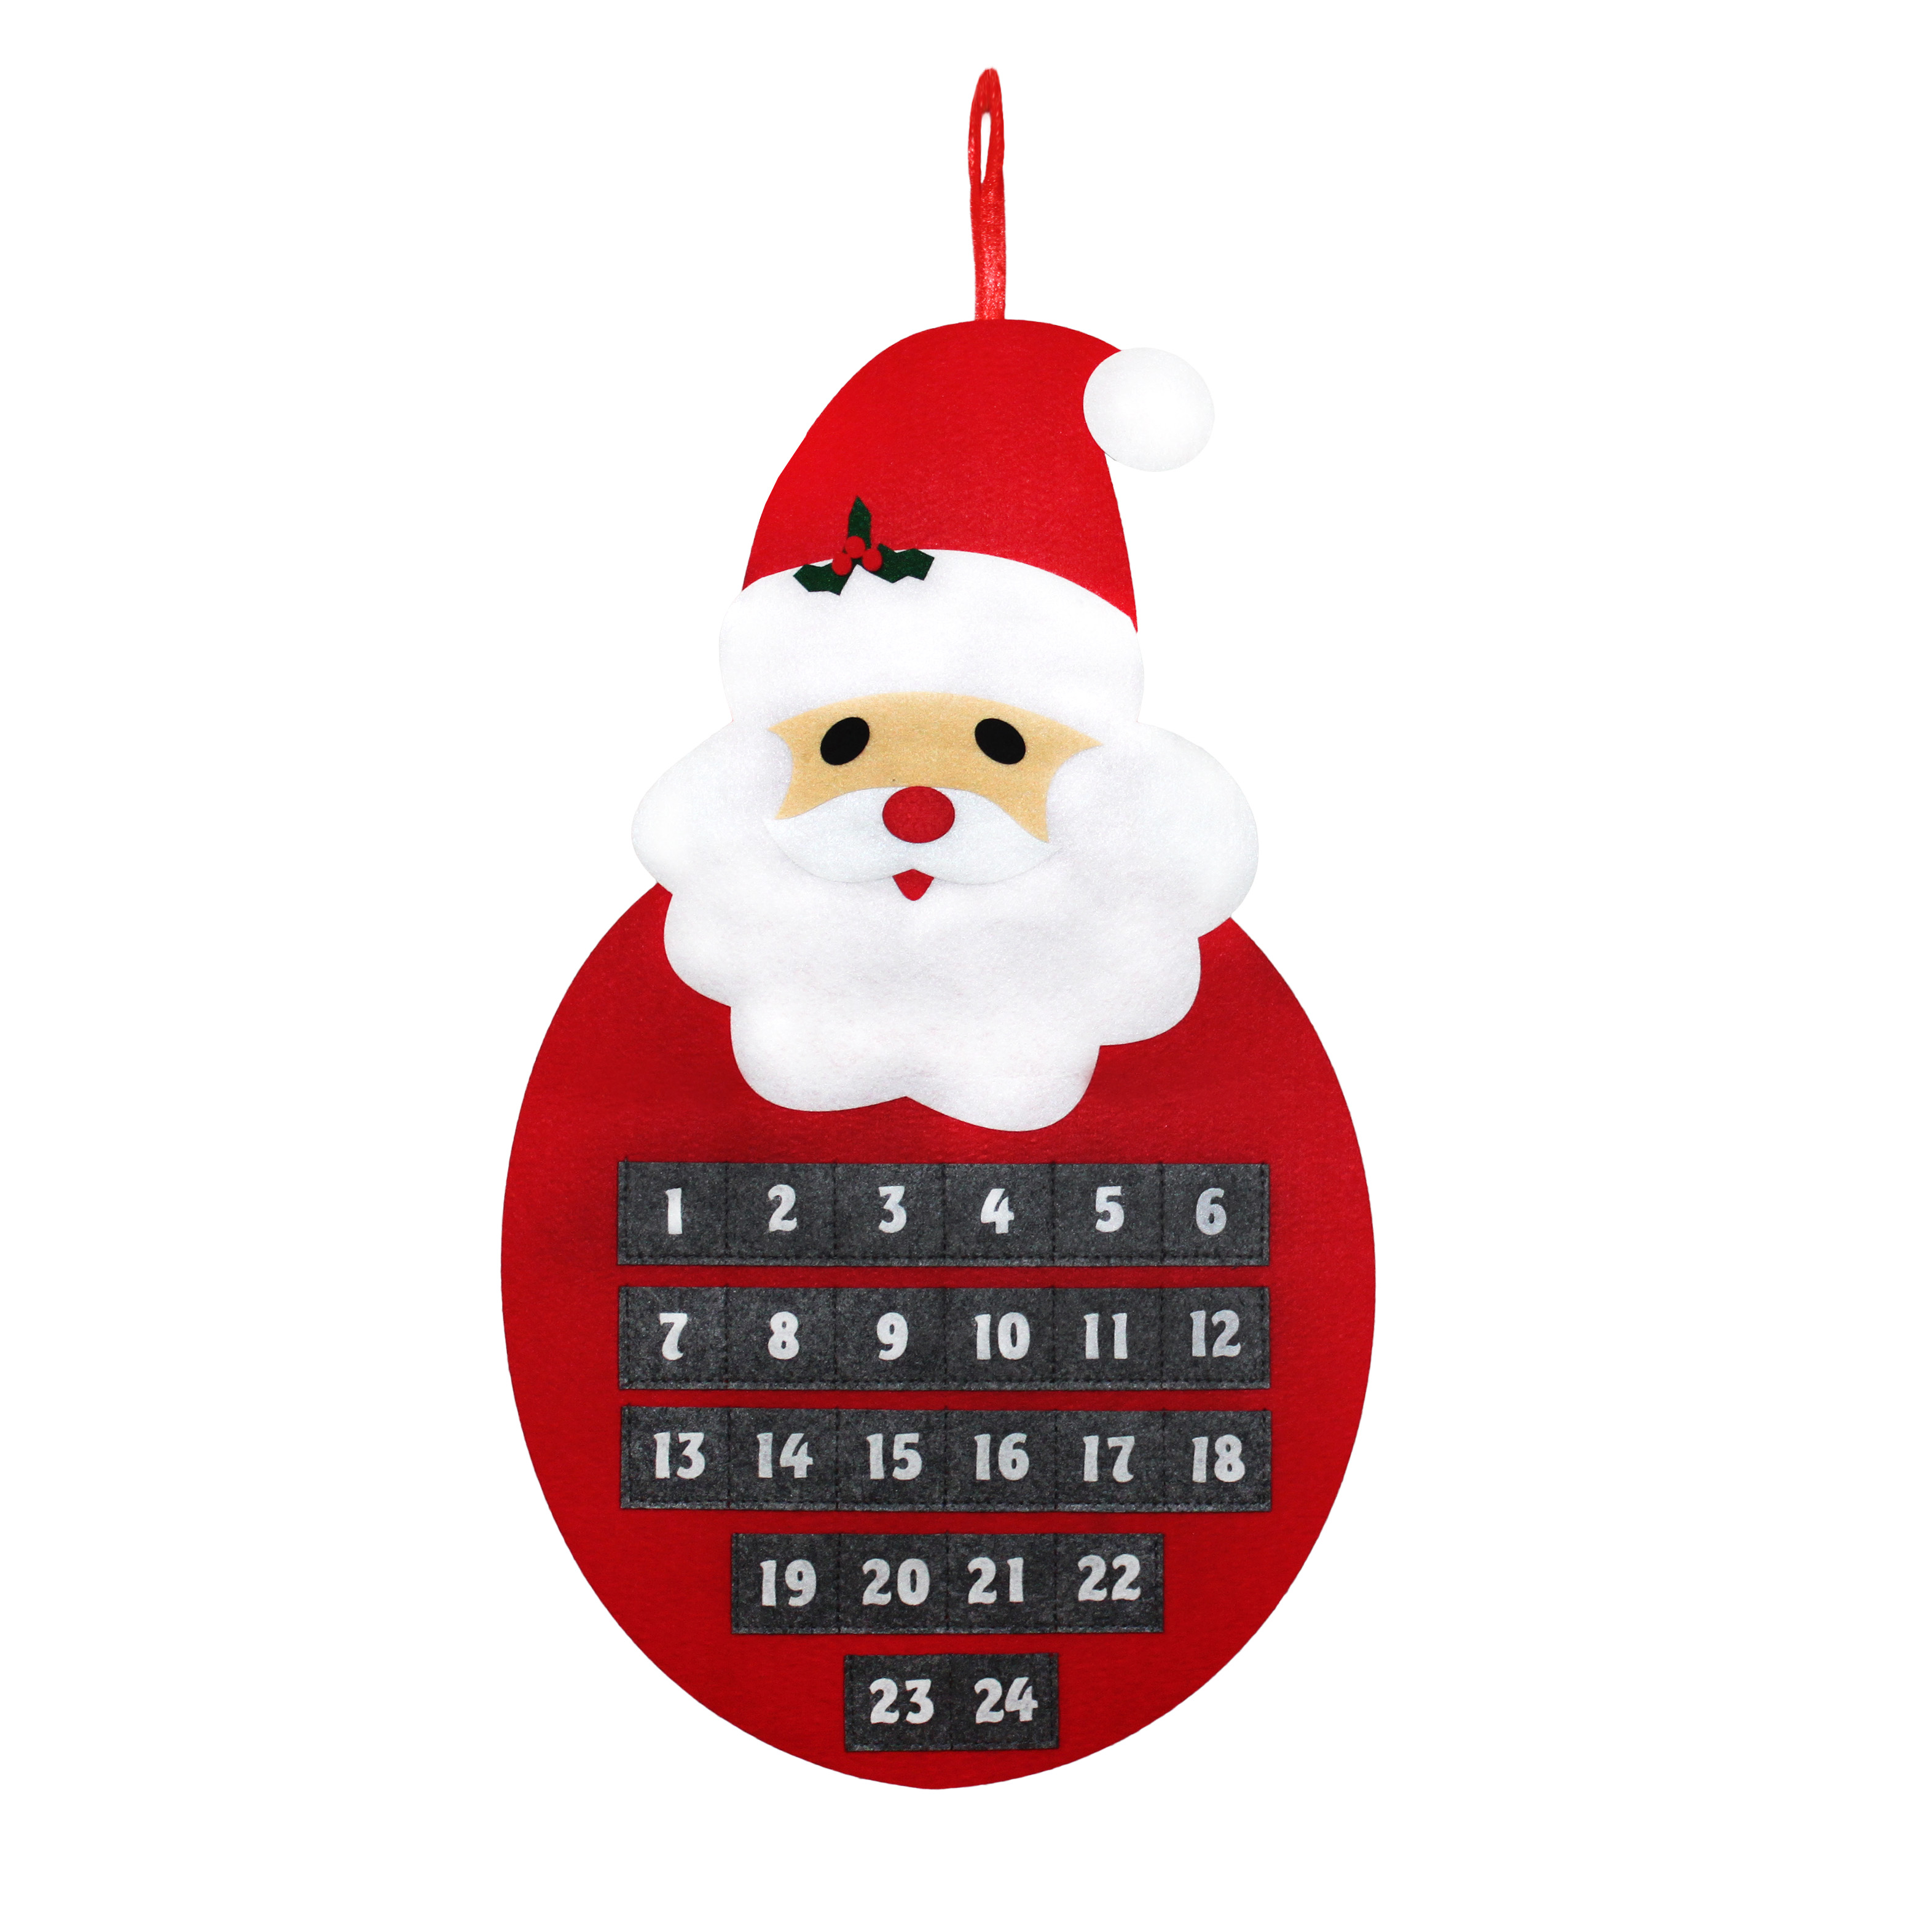 10pc Christmas Advent Calendar Santa Present Gift UK SELLER|GCJSET003-Calendar ONLY without Jewellery